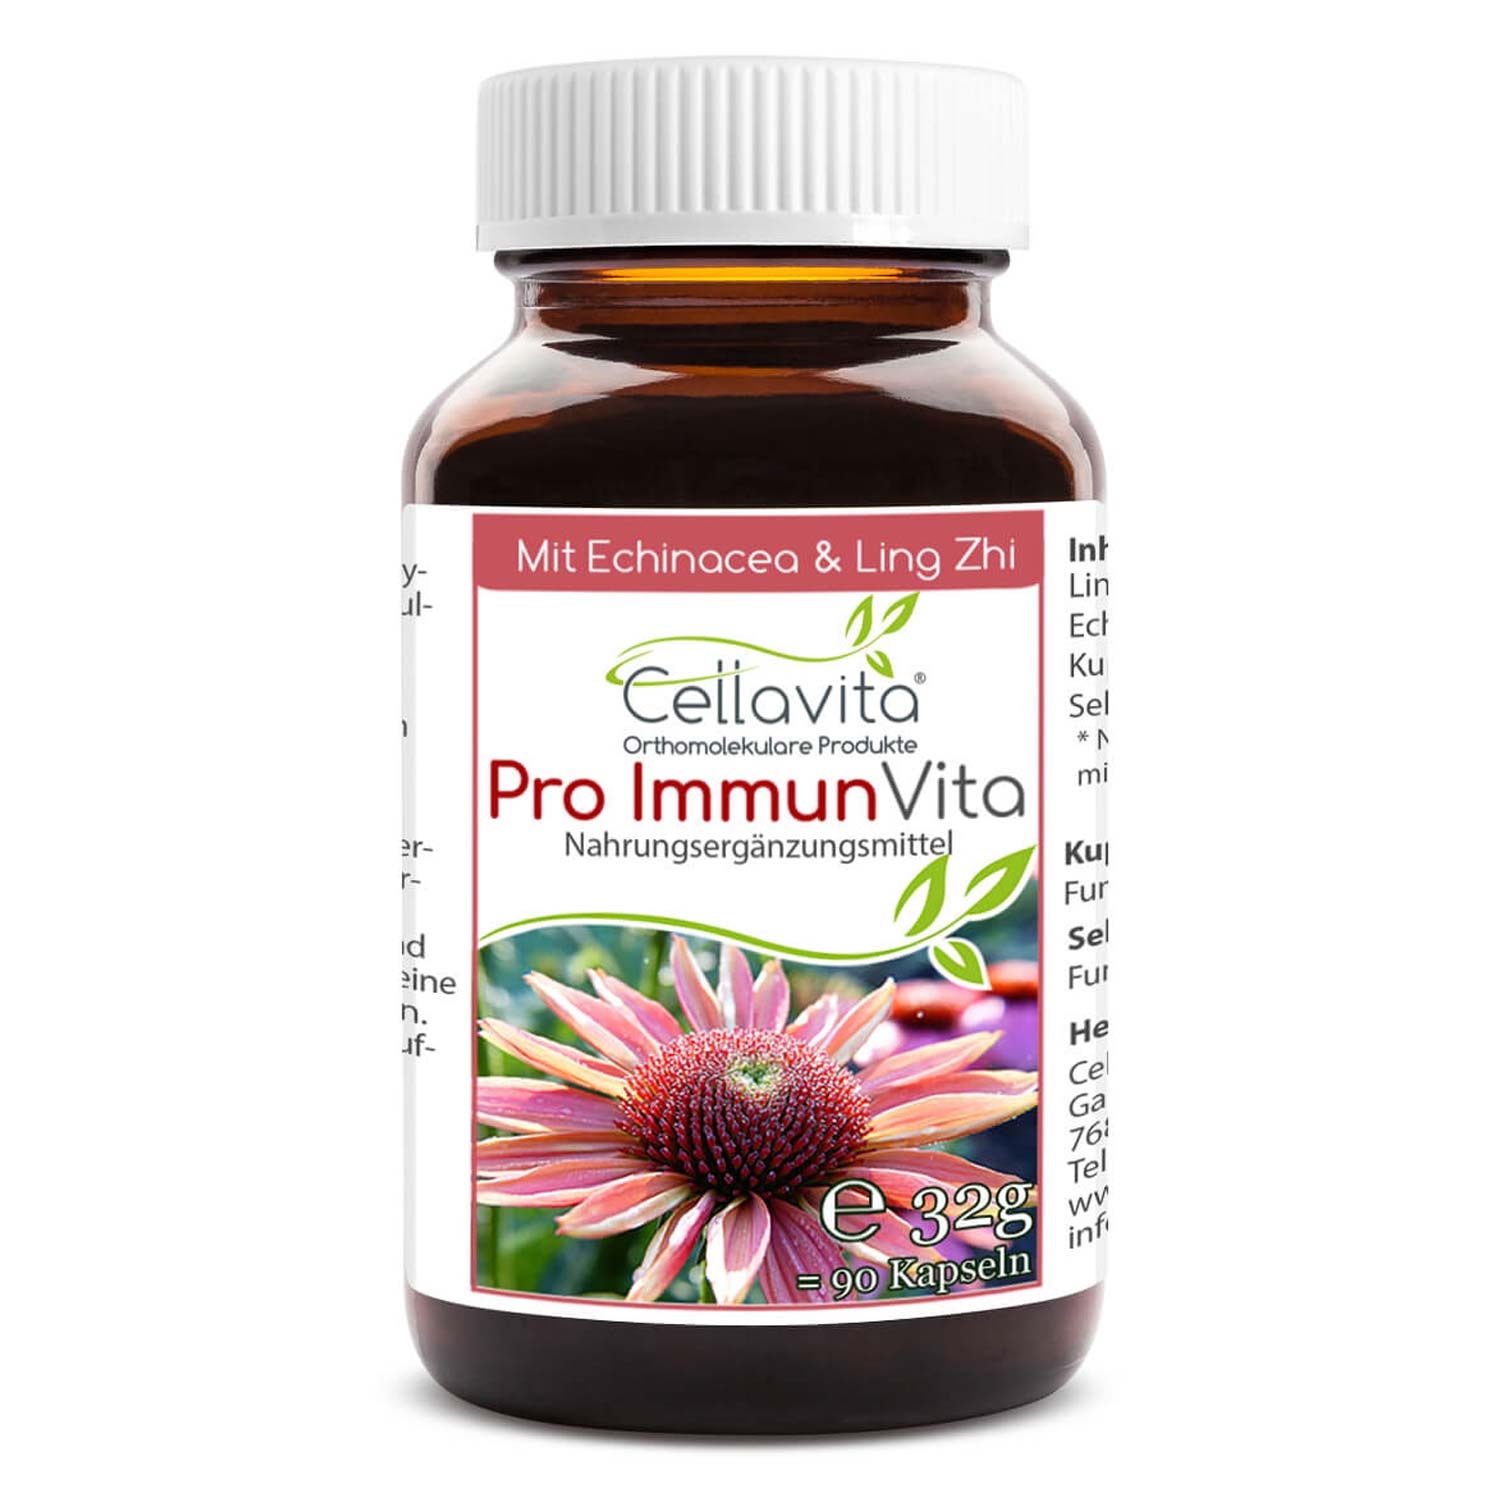 Pro Immun Vita (mit Echinacea + Ling Zhi) von Cellavita - 90 Kapseln